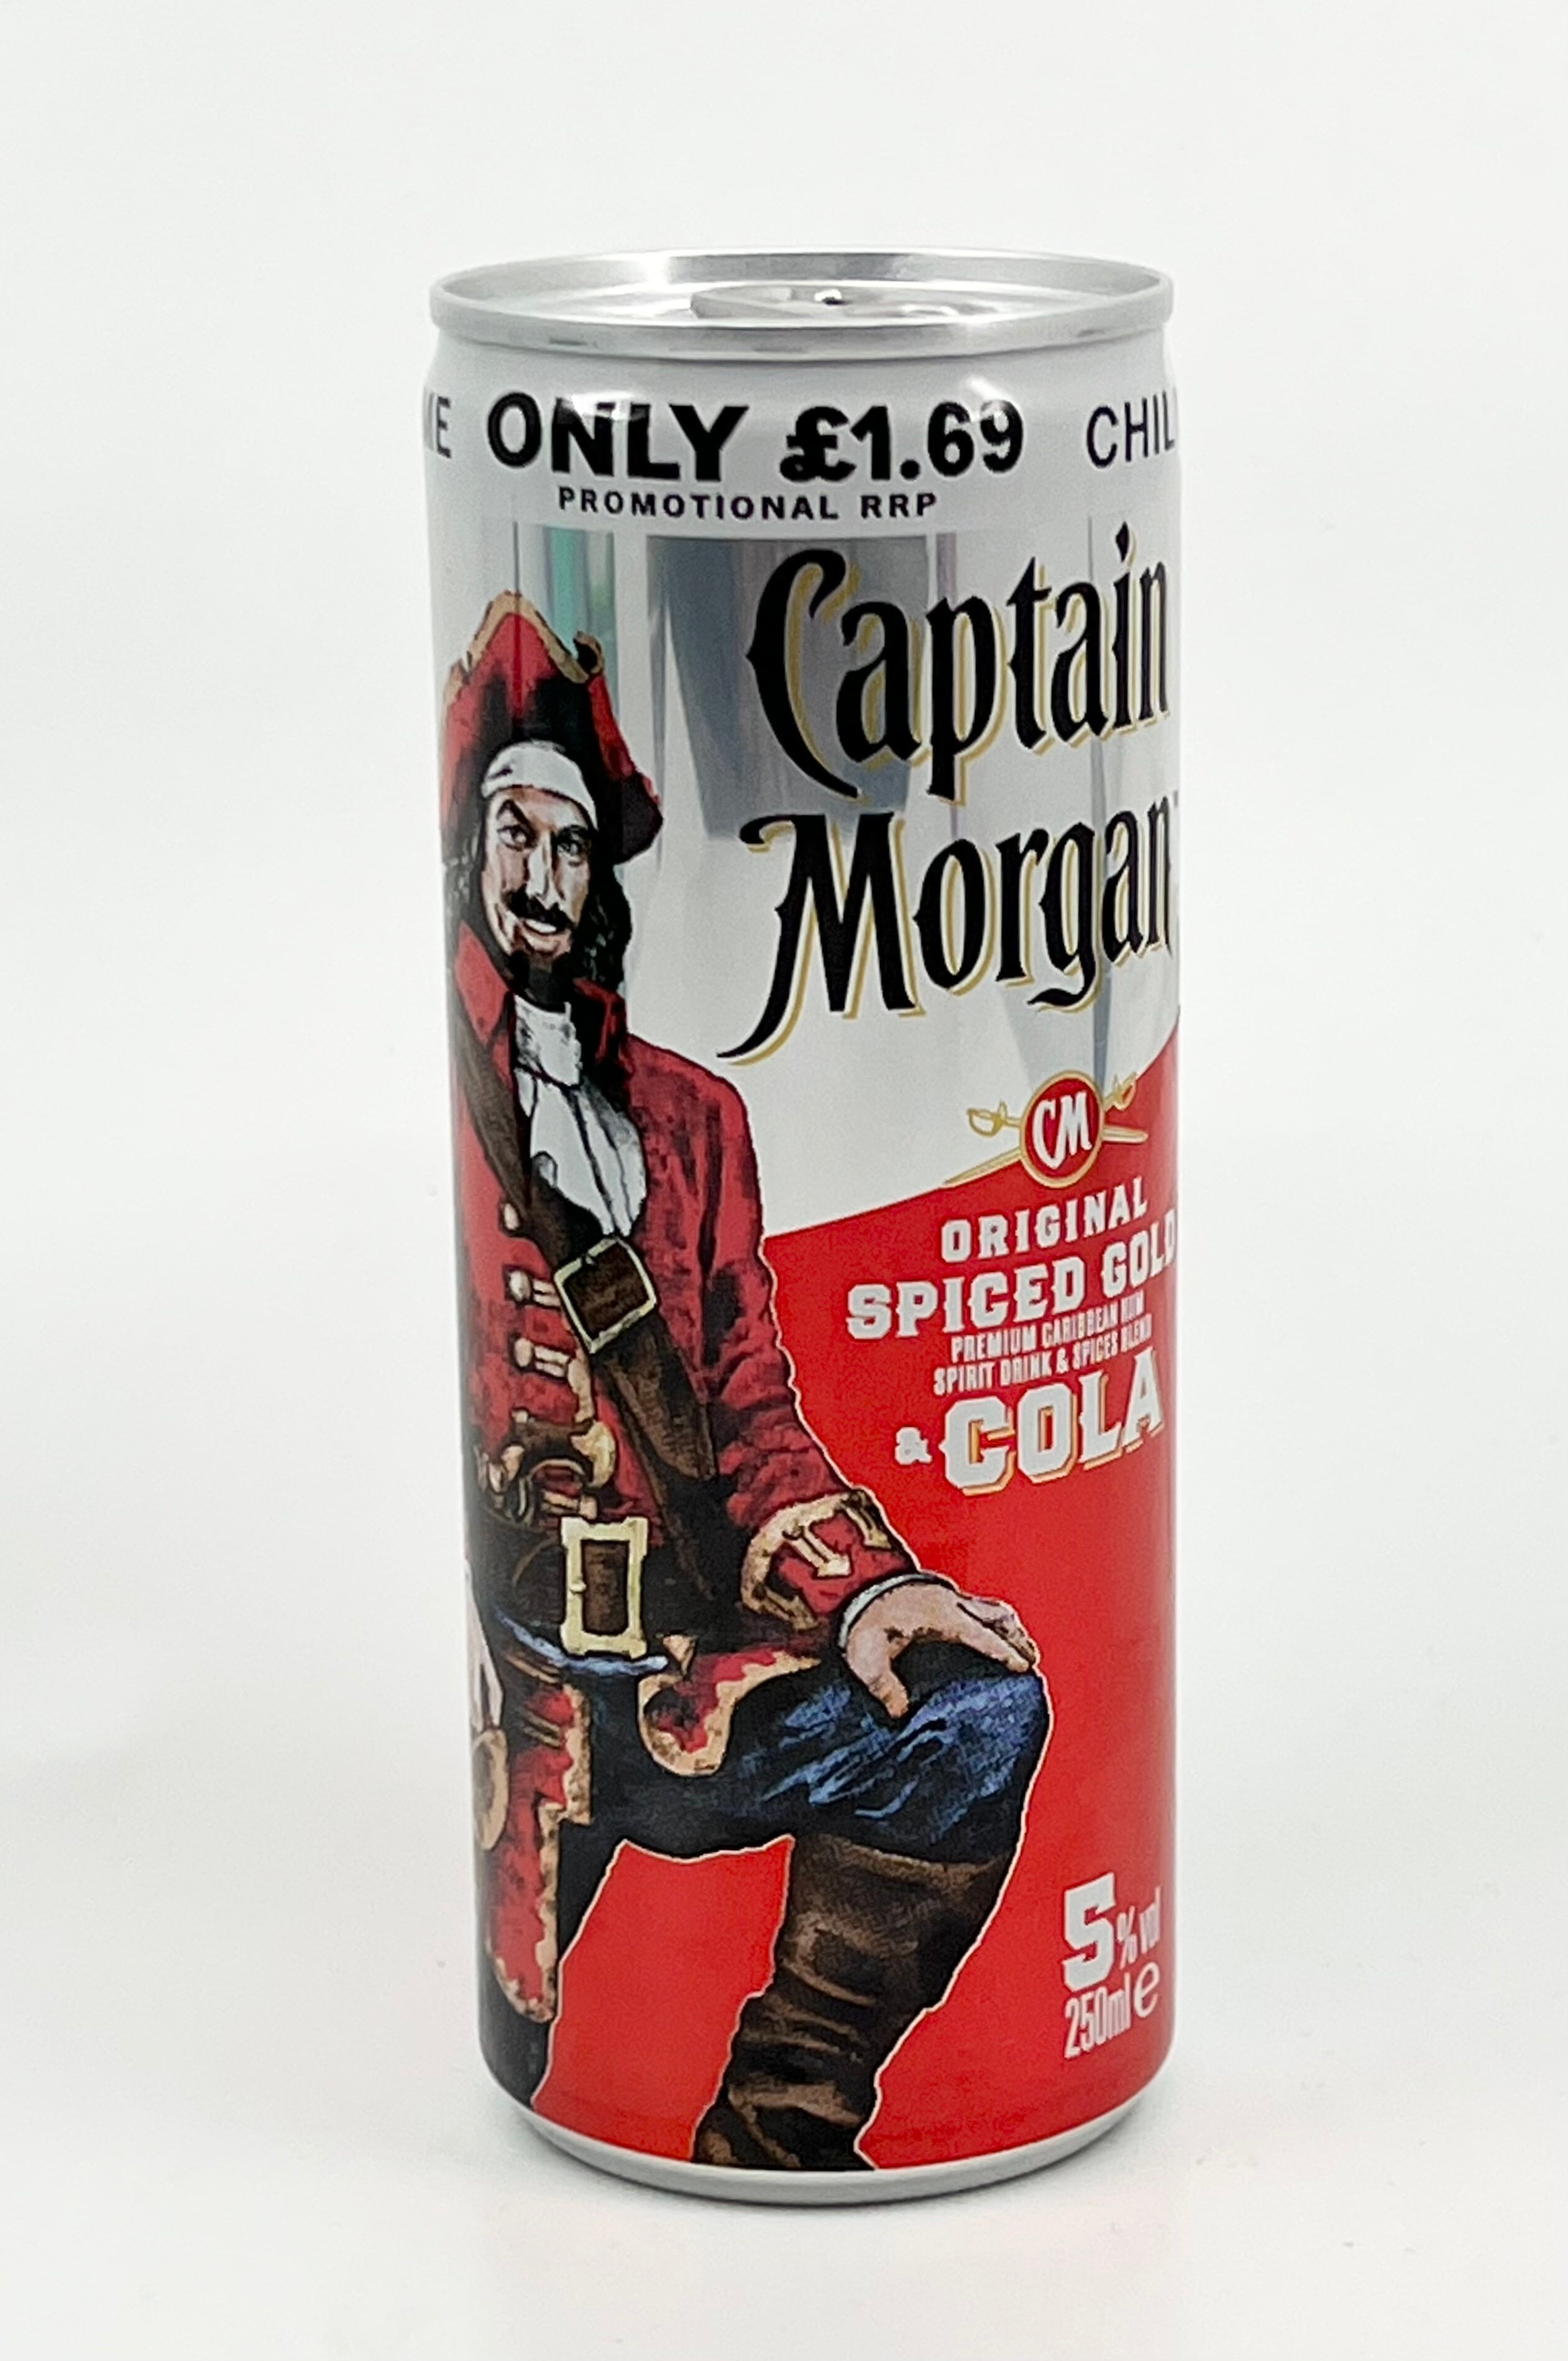 Captain Morgan's and Cola